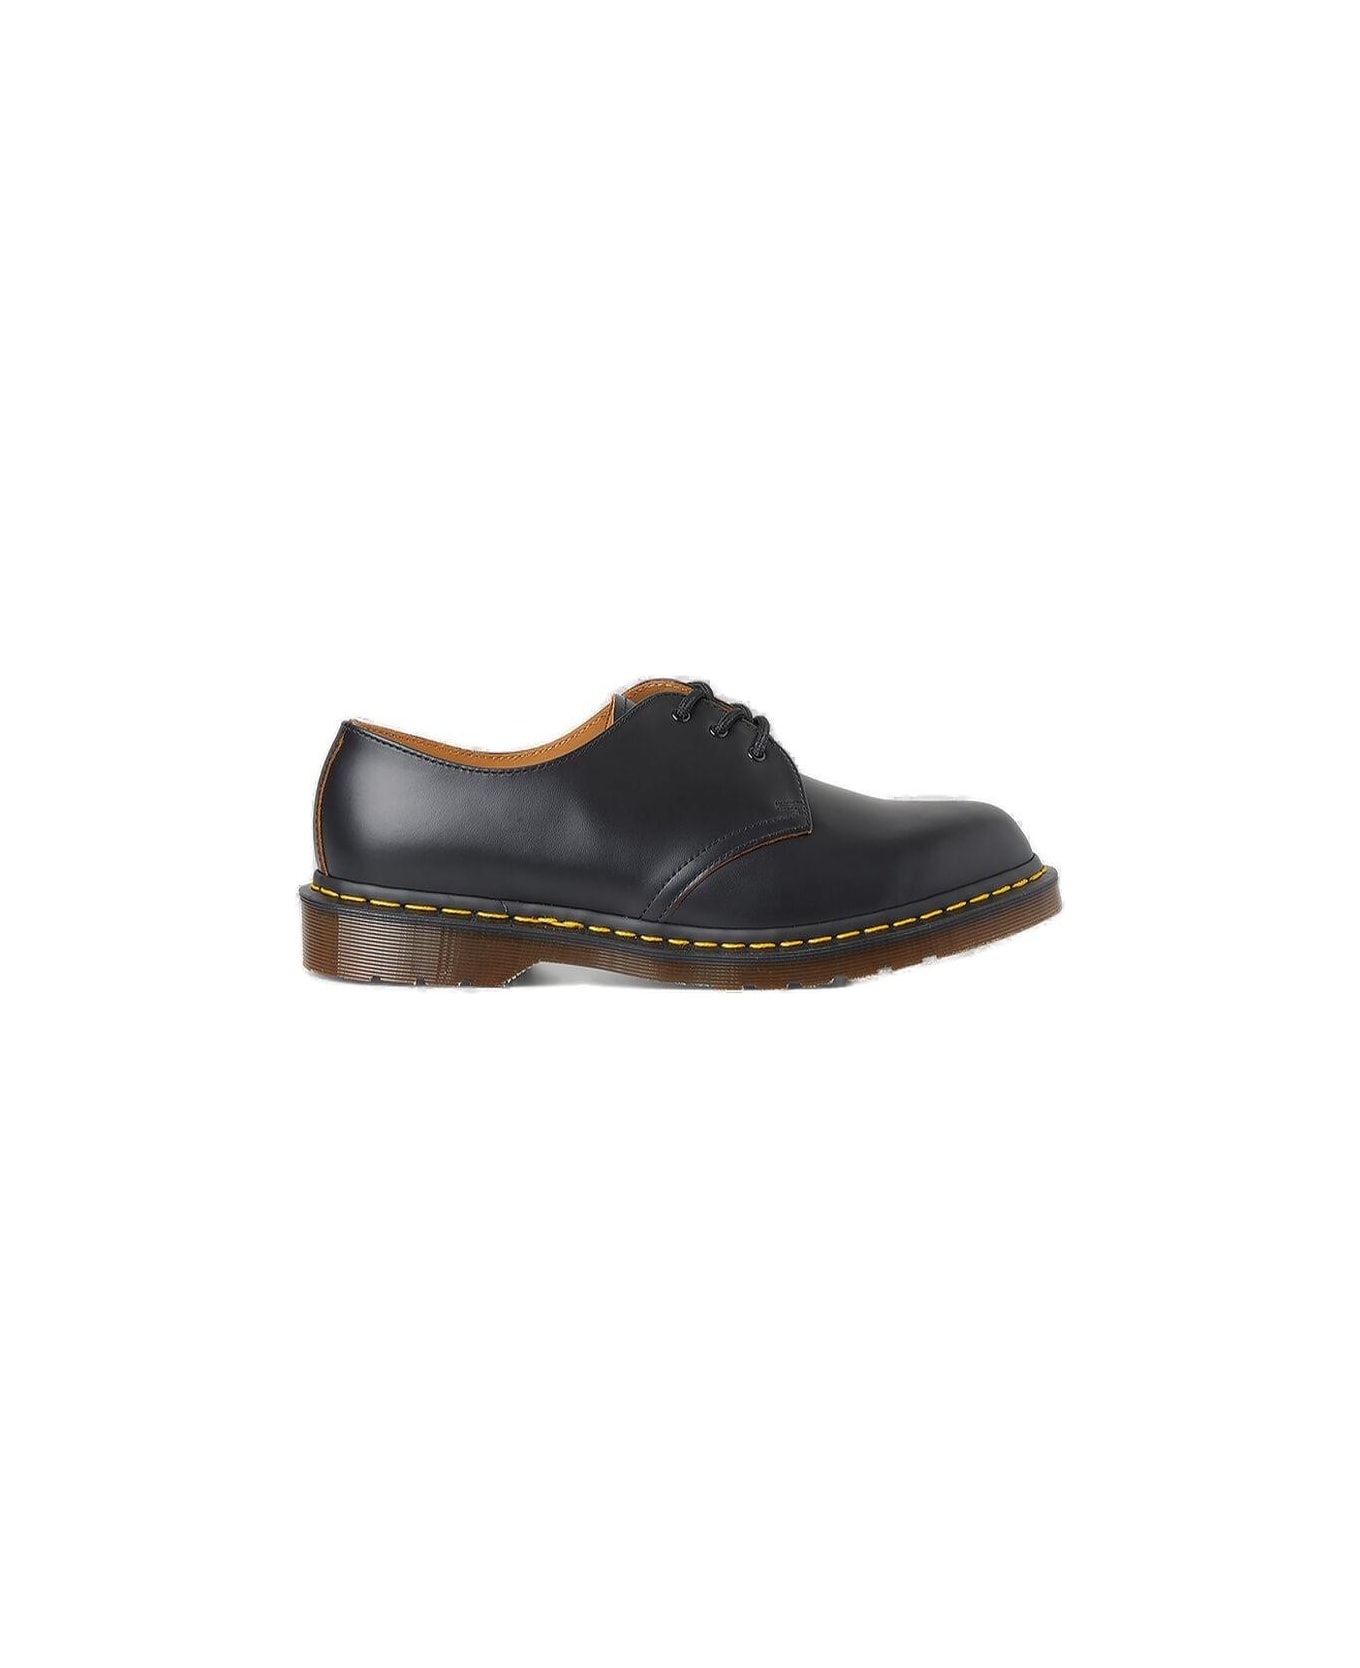 Dr. Martens Vintage 1461 Lace-up Shoes - BLACK フラットシューズ